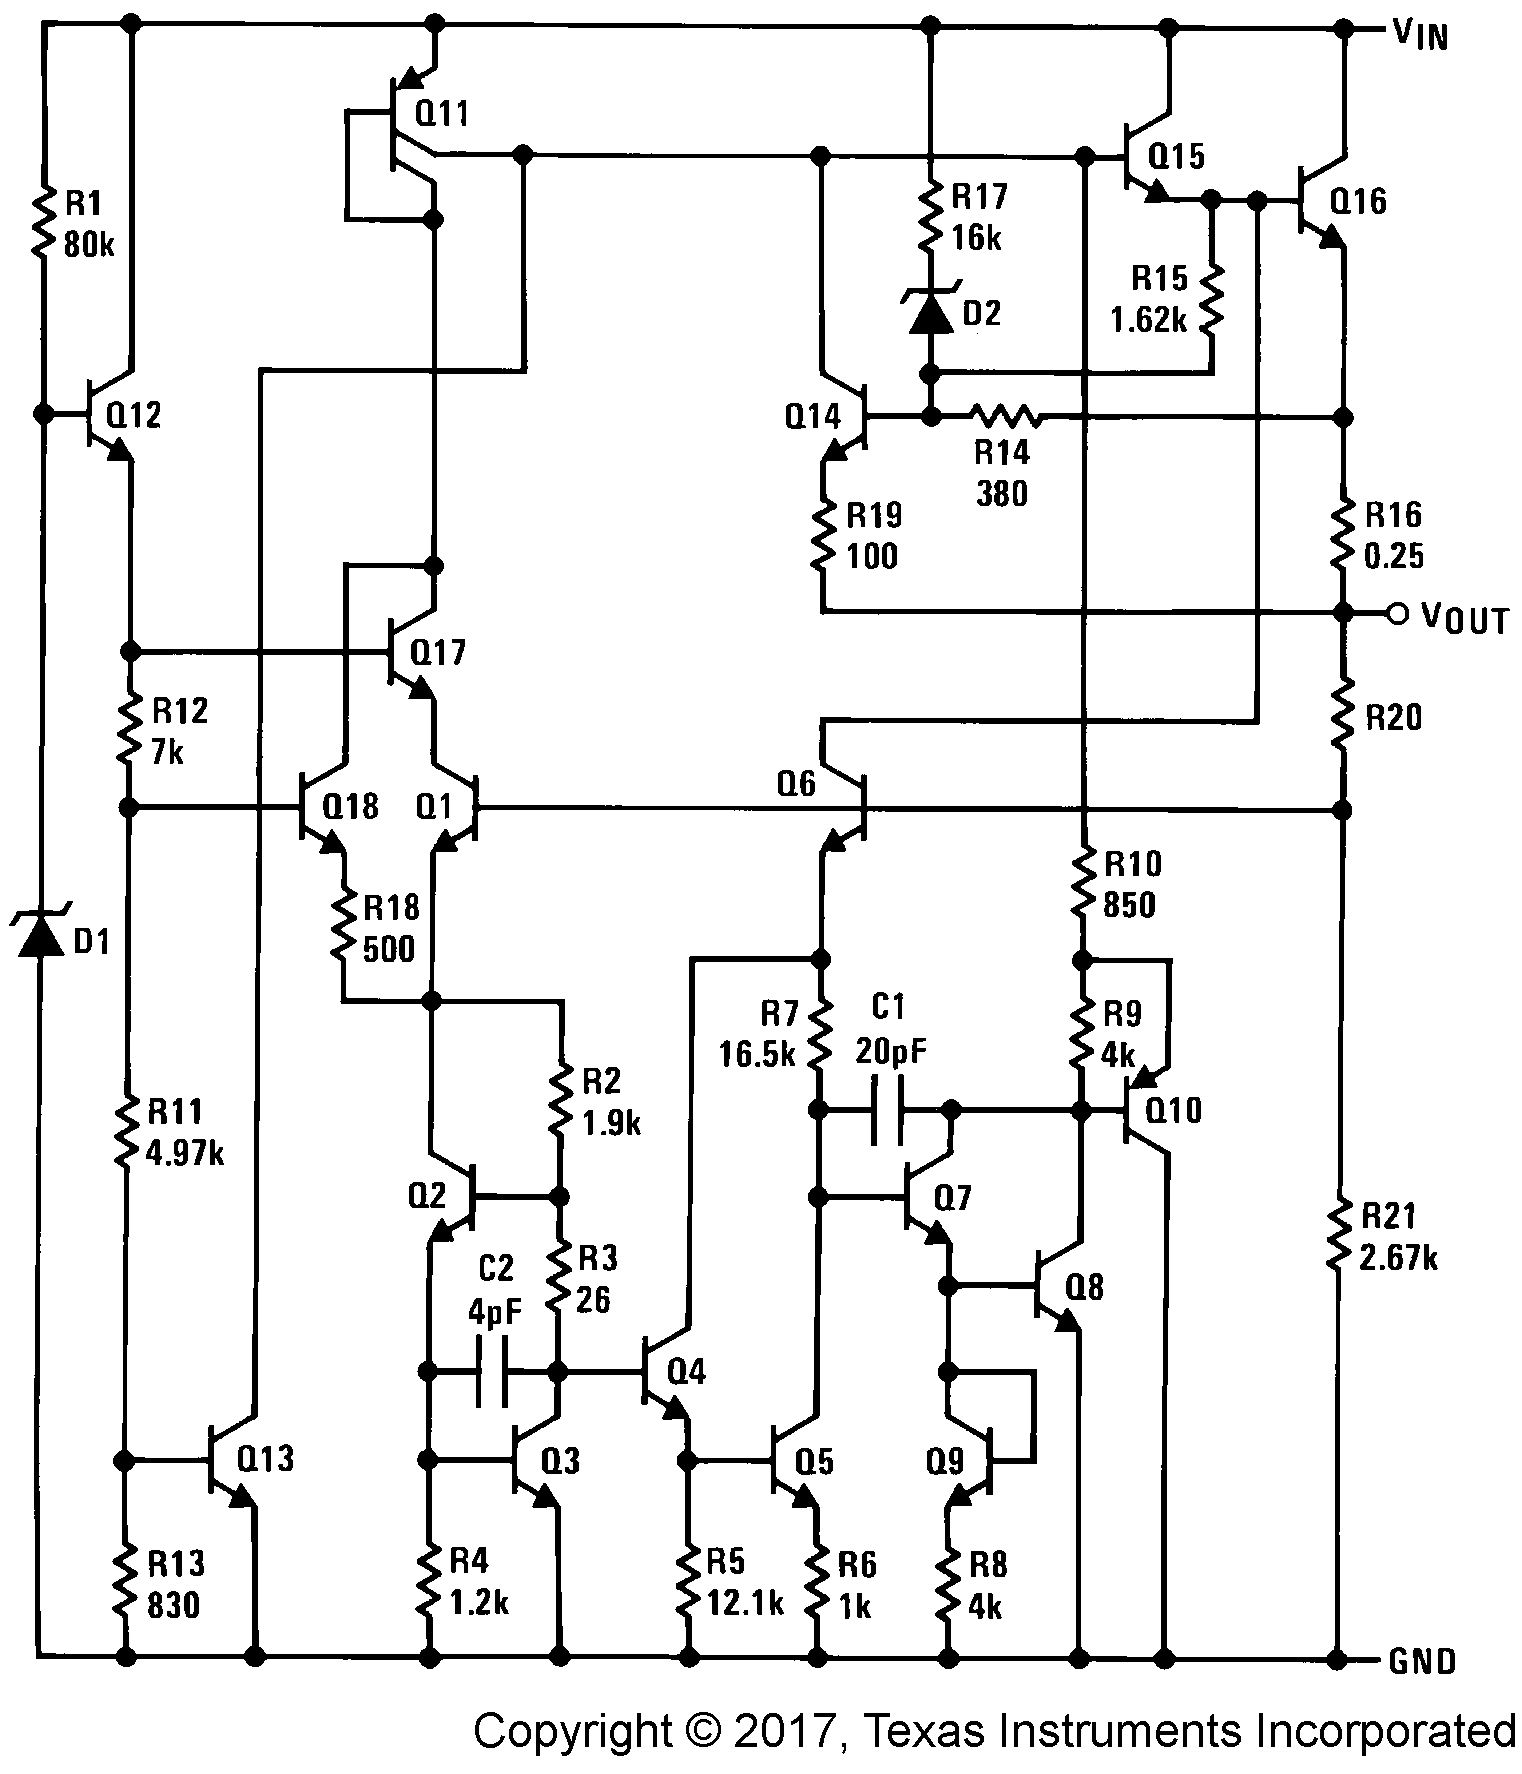 LM340-MIL lm340-mil-functional-block-diagram.png